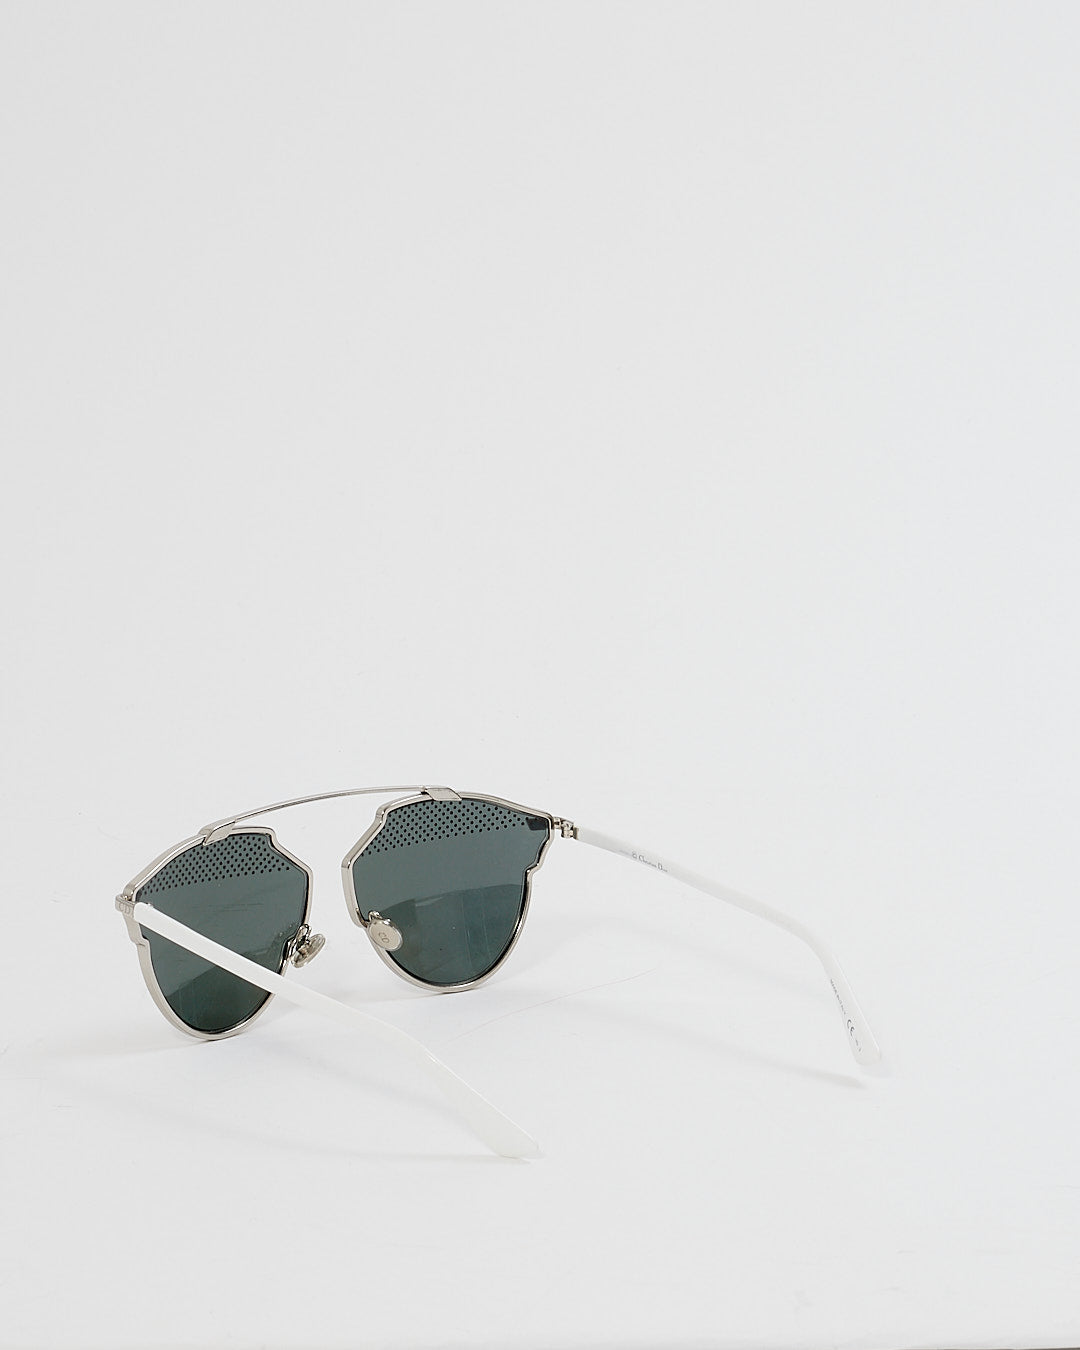 Dior Silver SoRealPop Sunglasses